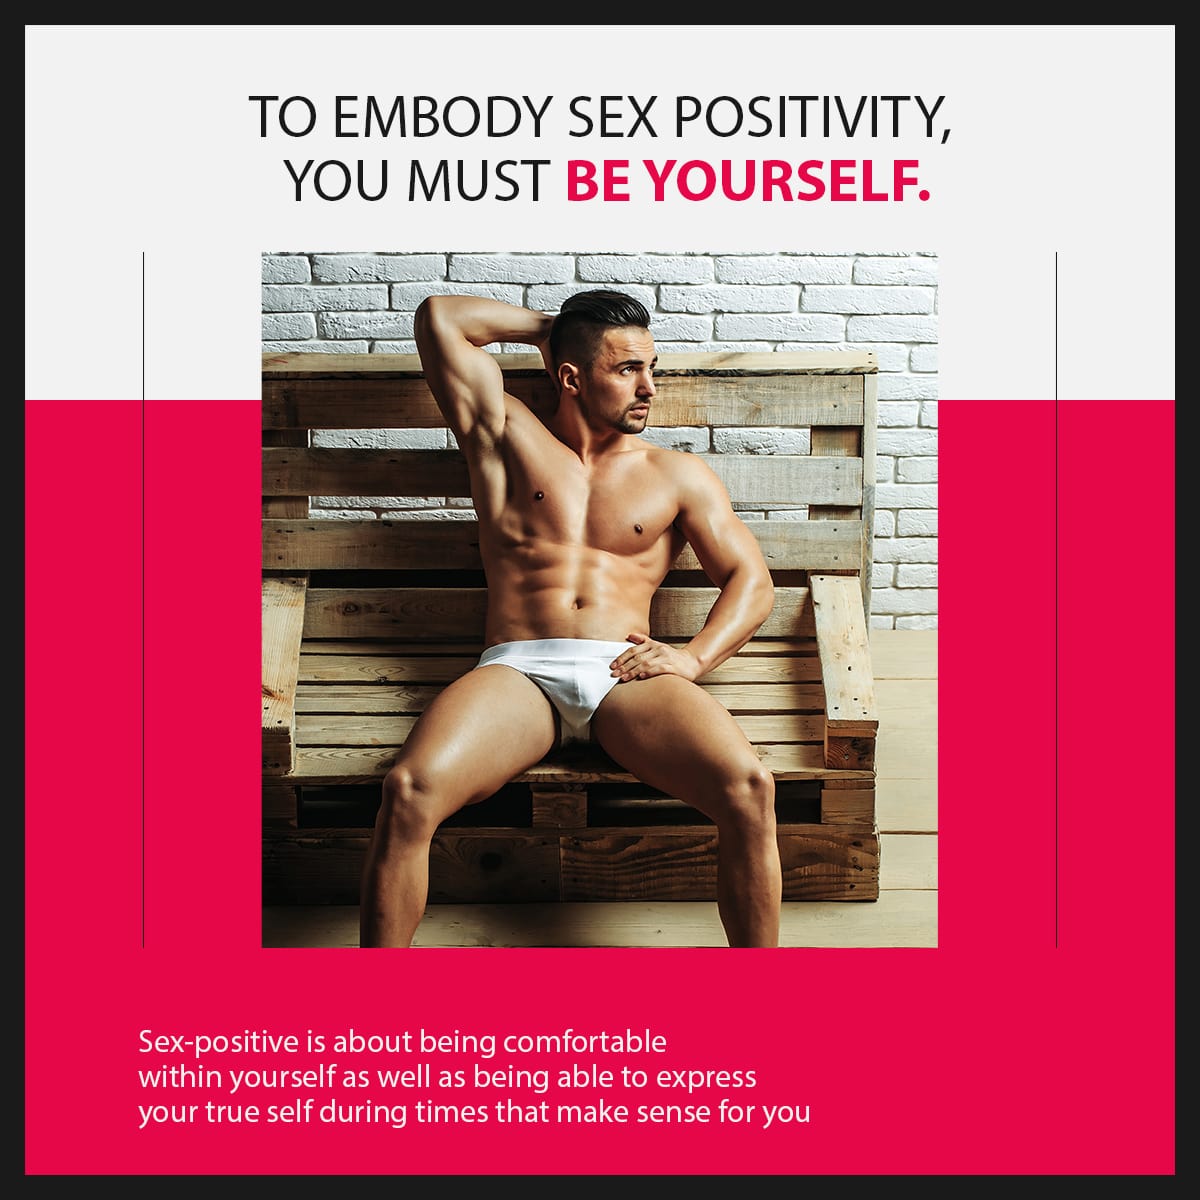 embody sex positivity